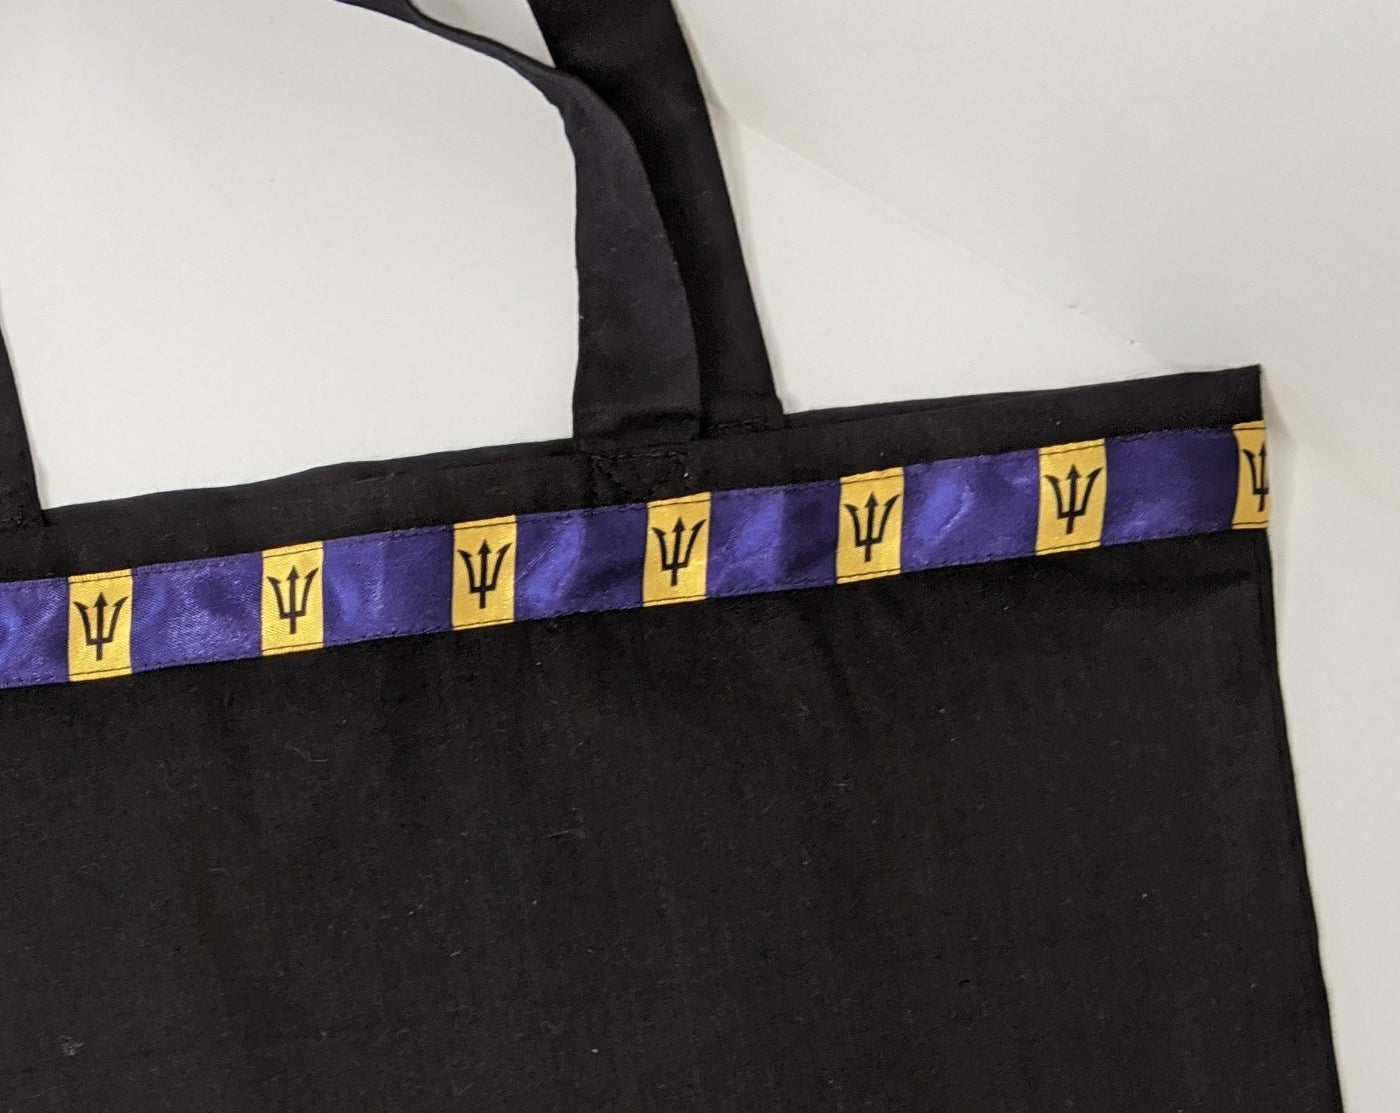 Black tote bag with Barbados flag detail